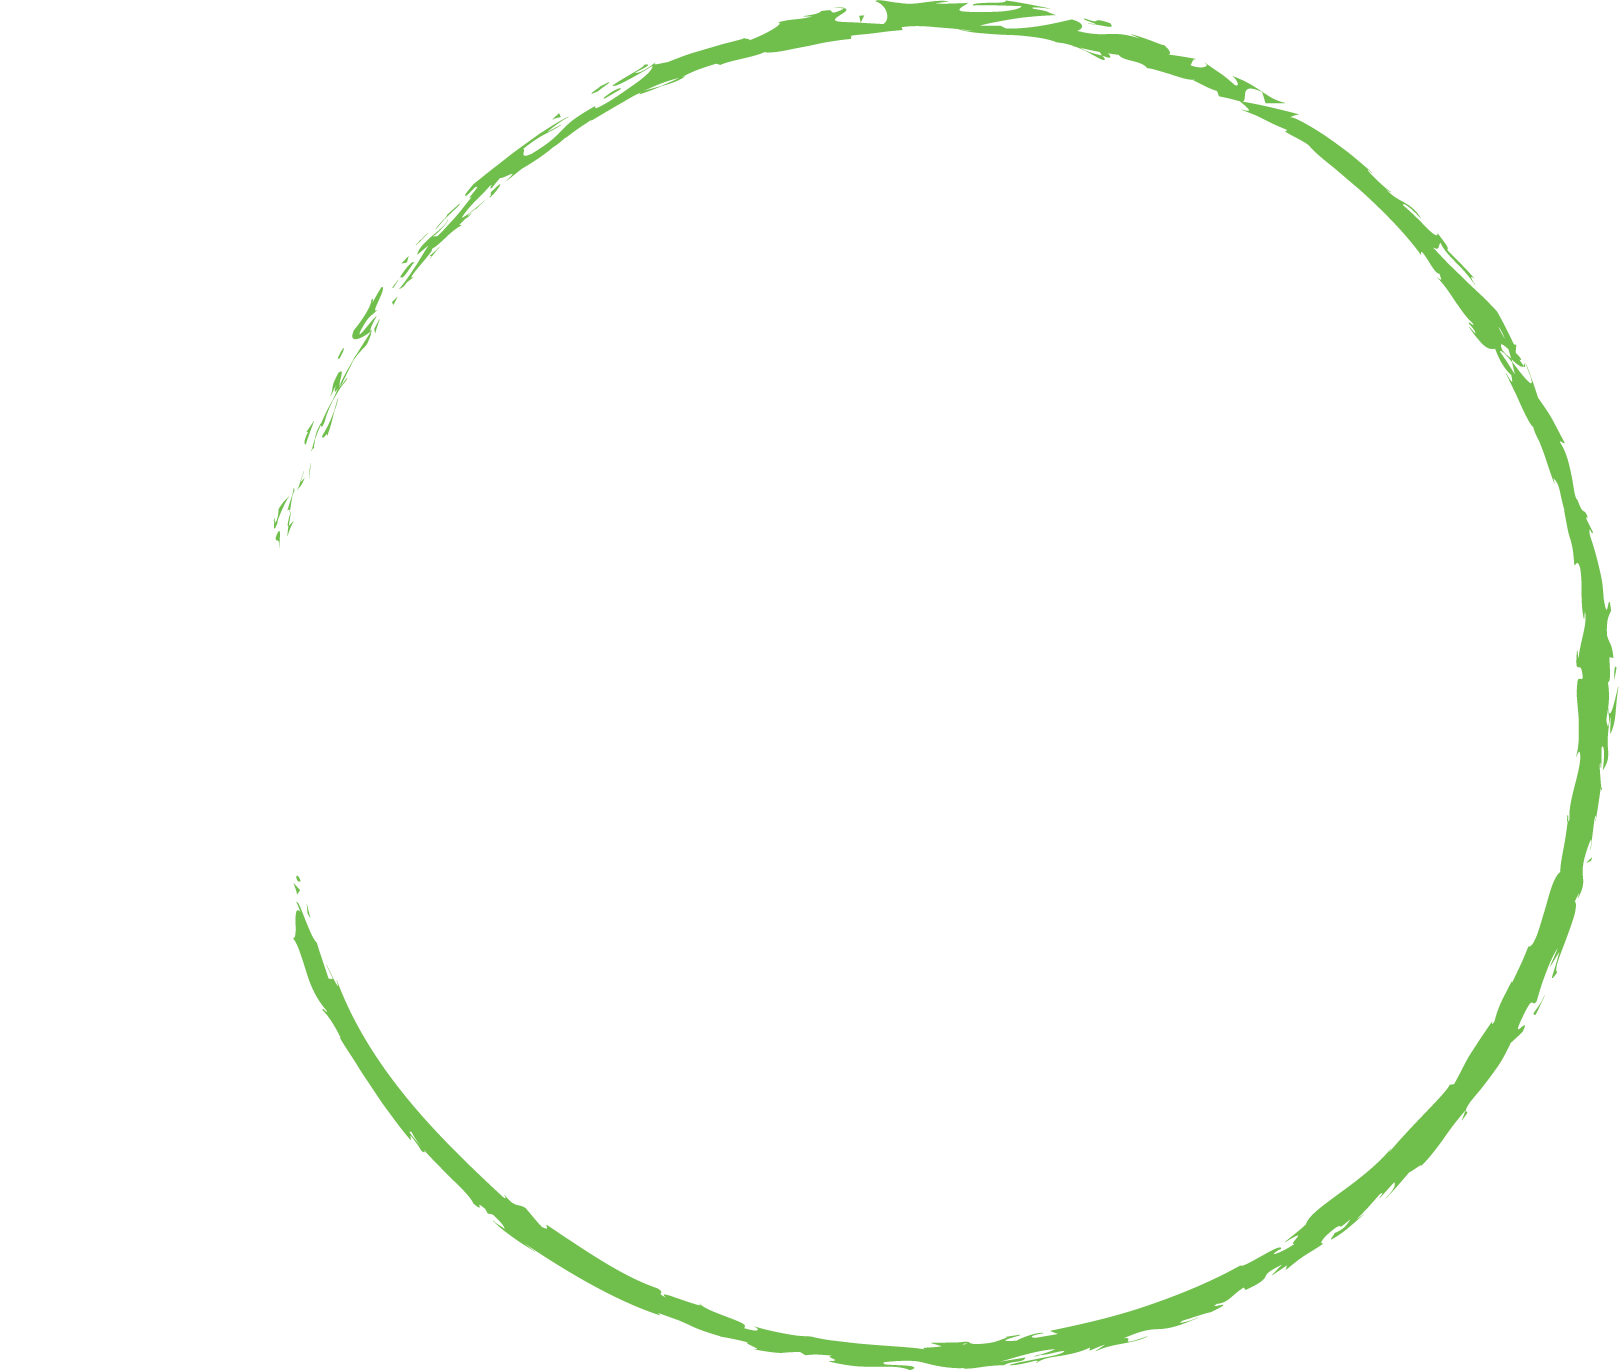 The Leadership Project - Revolutionary Leadership Program